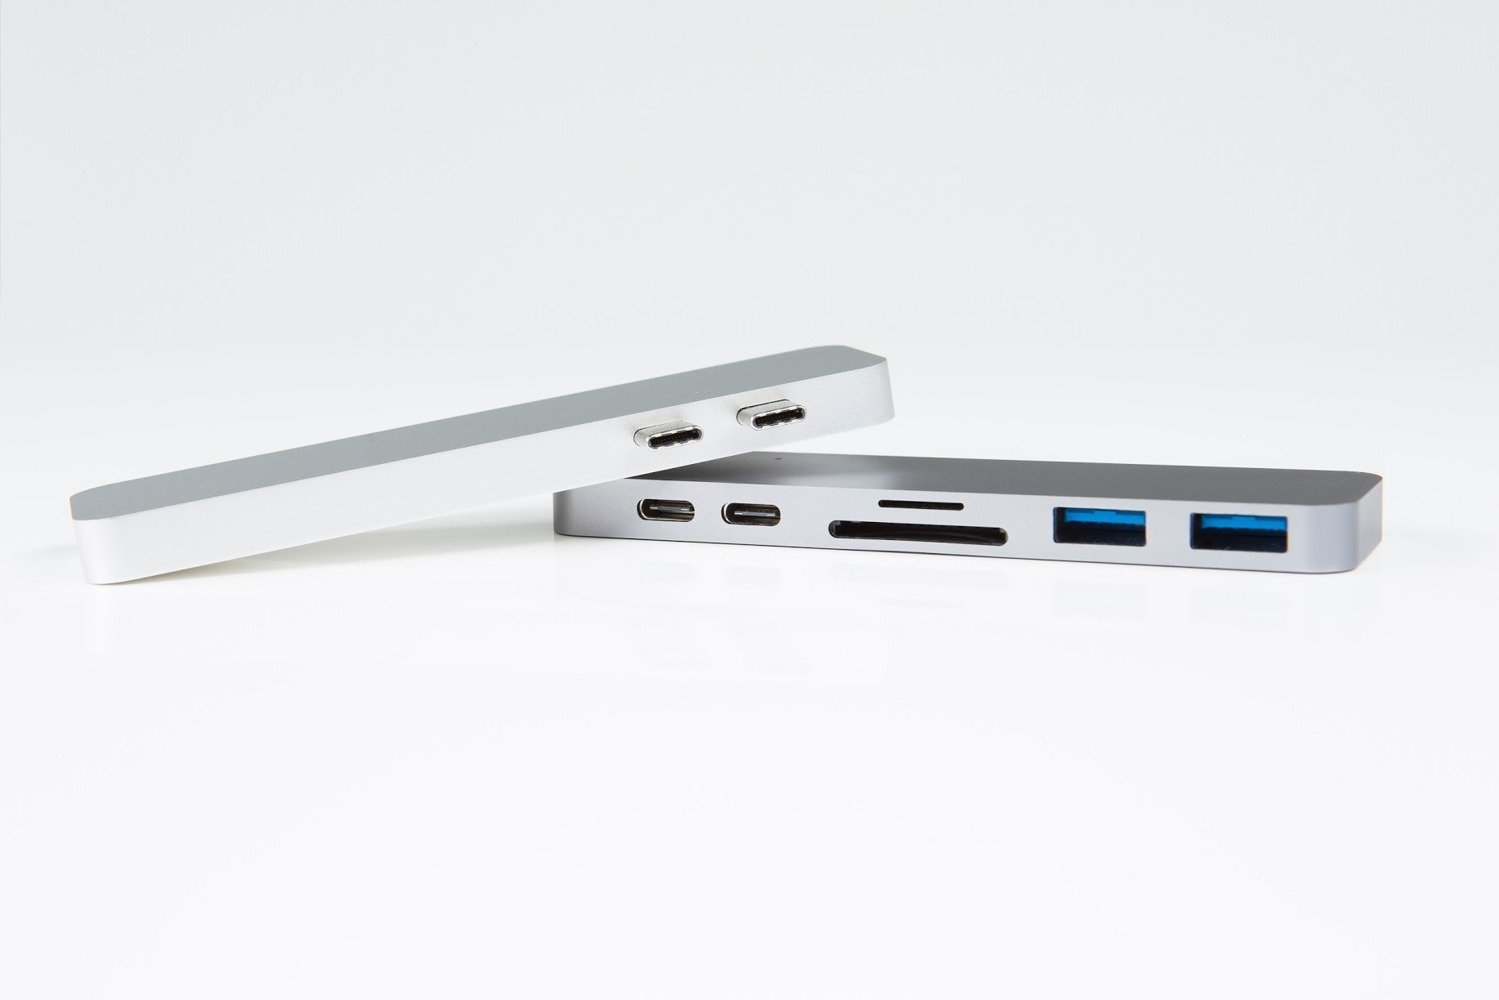 HyperDrive Thunderbolt 3 USB-C Hub for MacBook Pro (Silver)